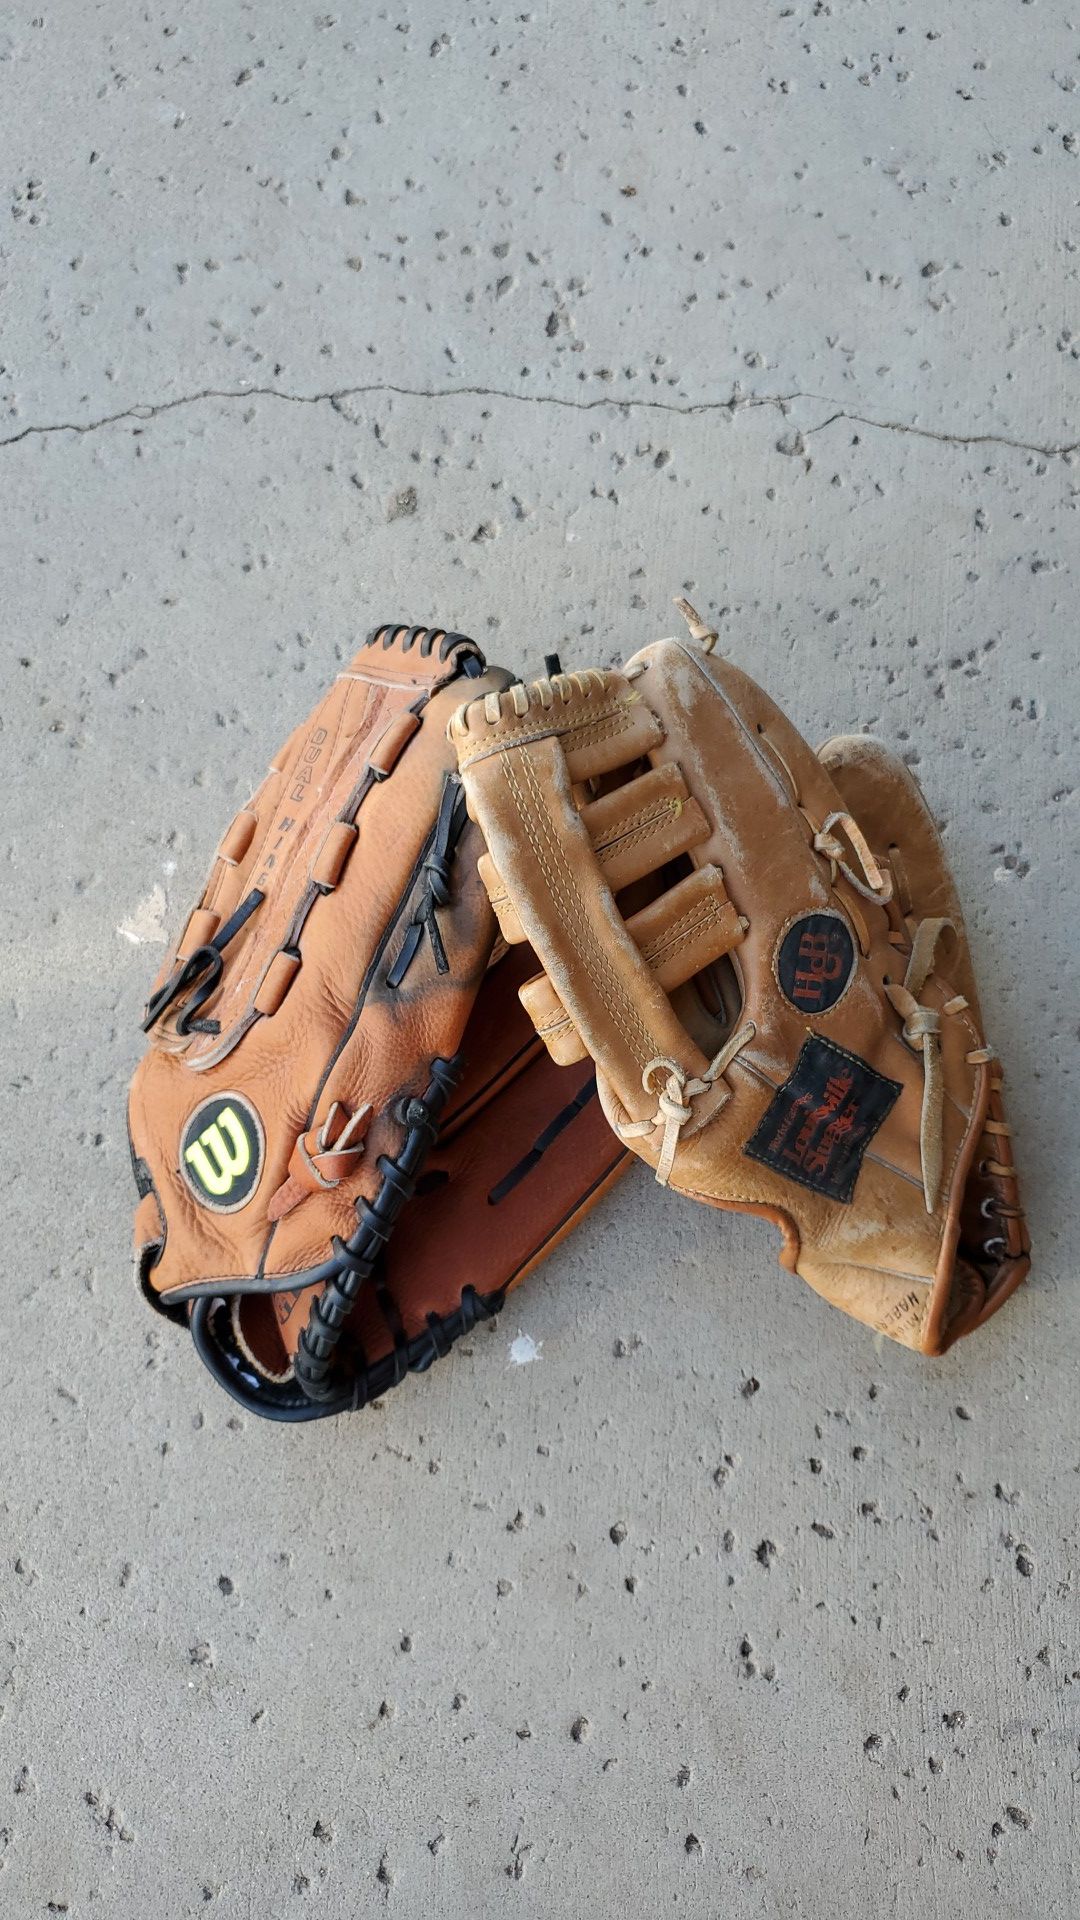 Pair of softball gloves